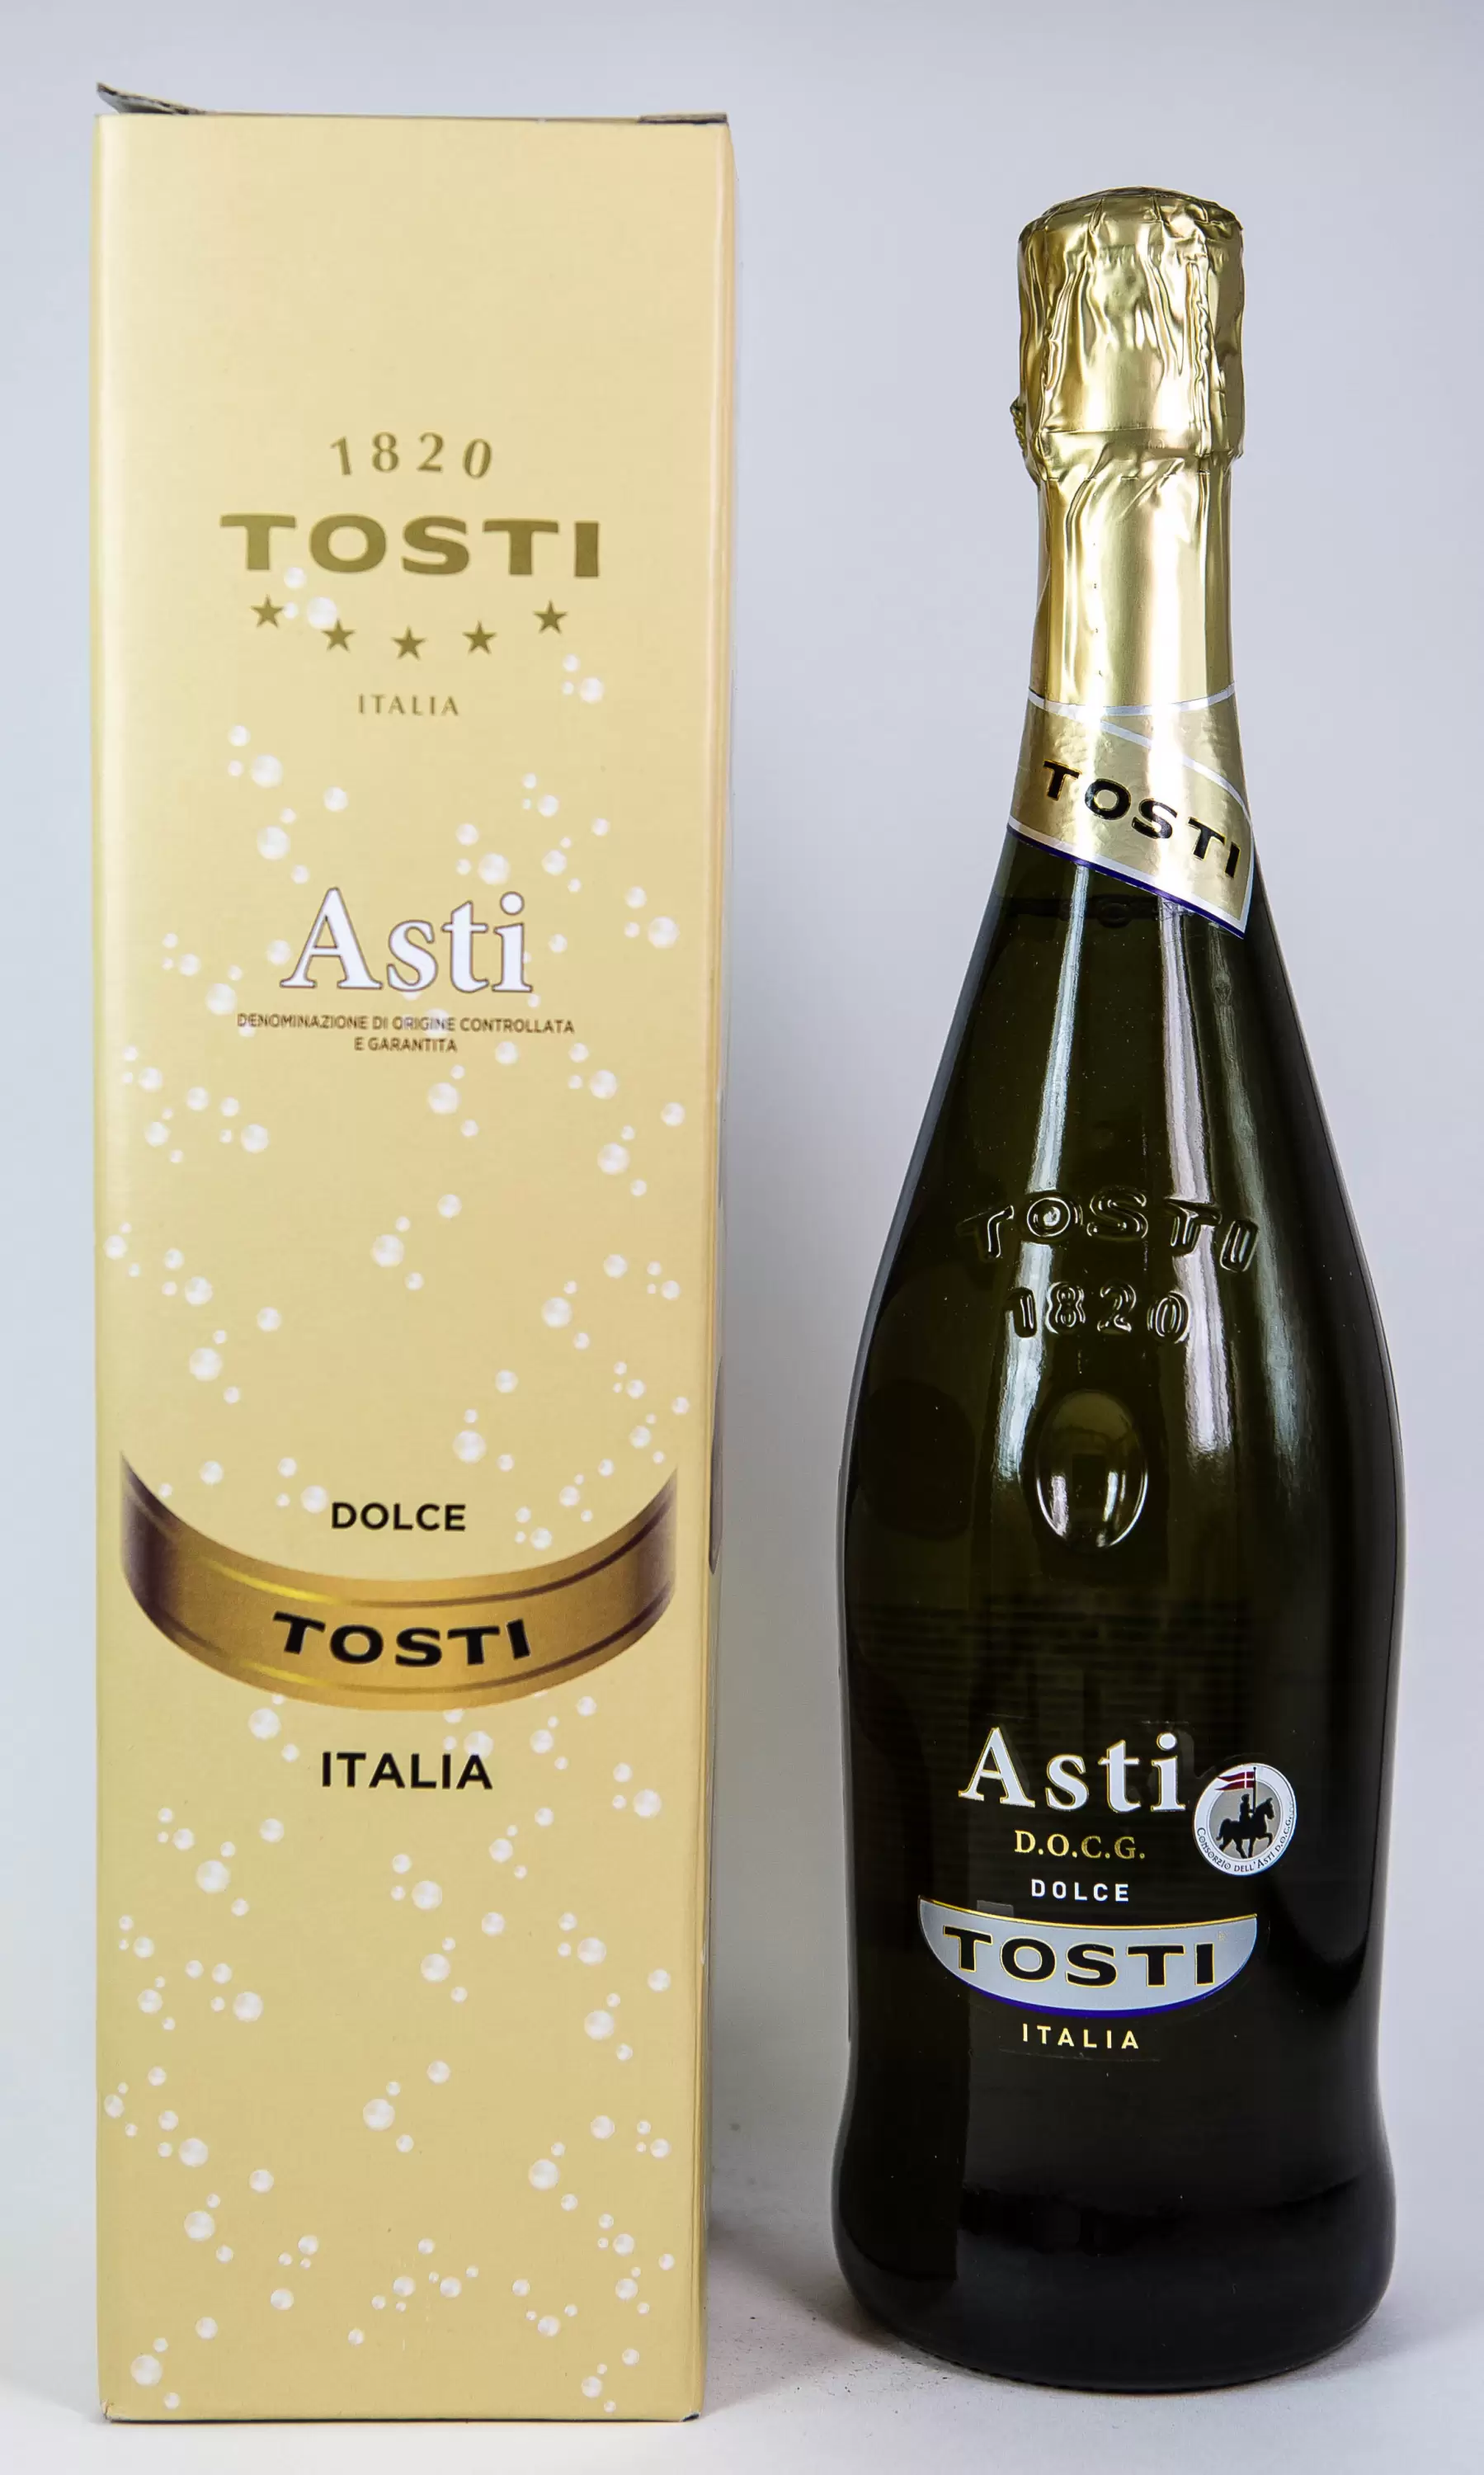 Prosecco tosti. Игристое Асти тости. Асти тости шампанское. Игристое вино Tosti, Asti DOCG. Шампанское Tosti Valli Asti.